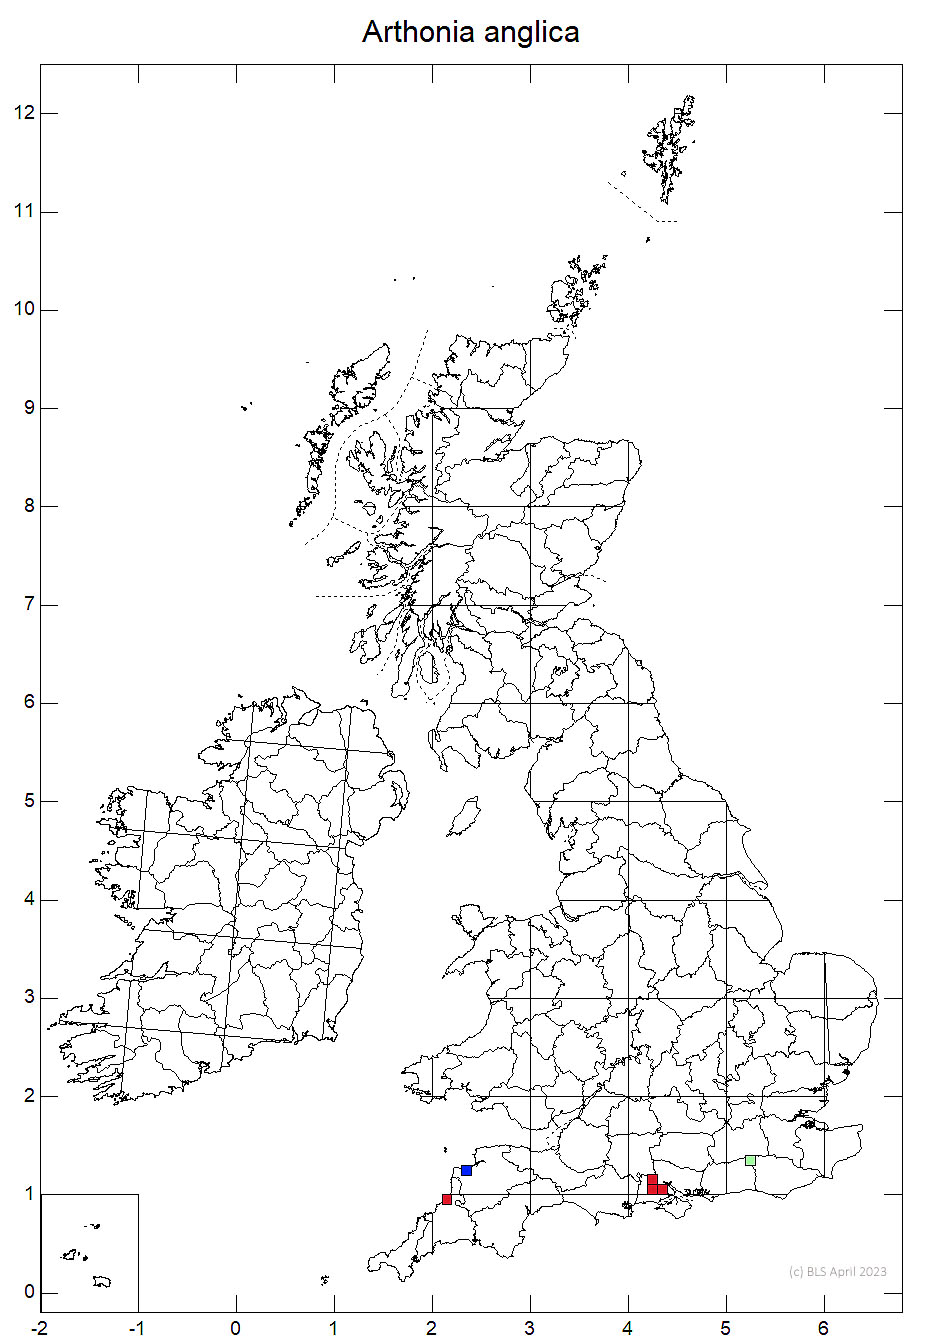 Arthonia anglica 10km sq distribution map